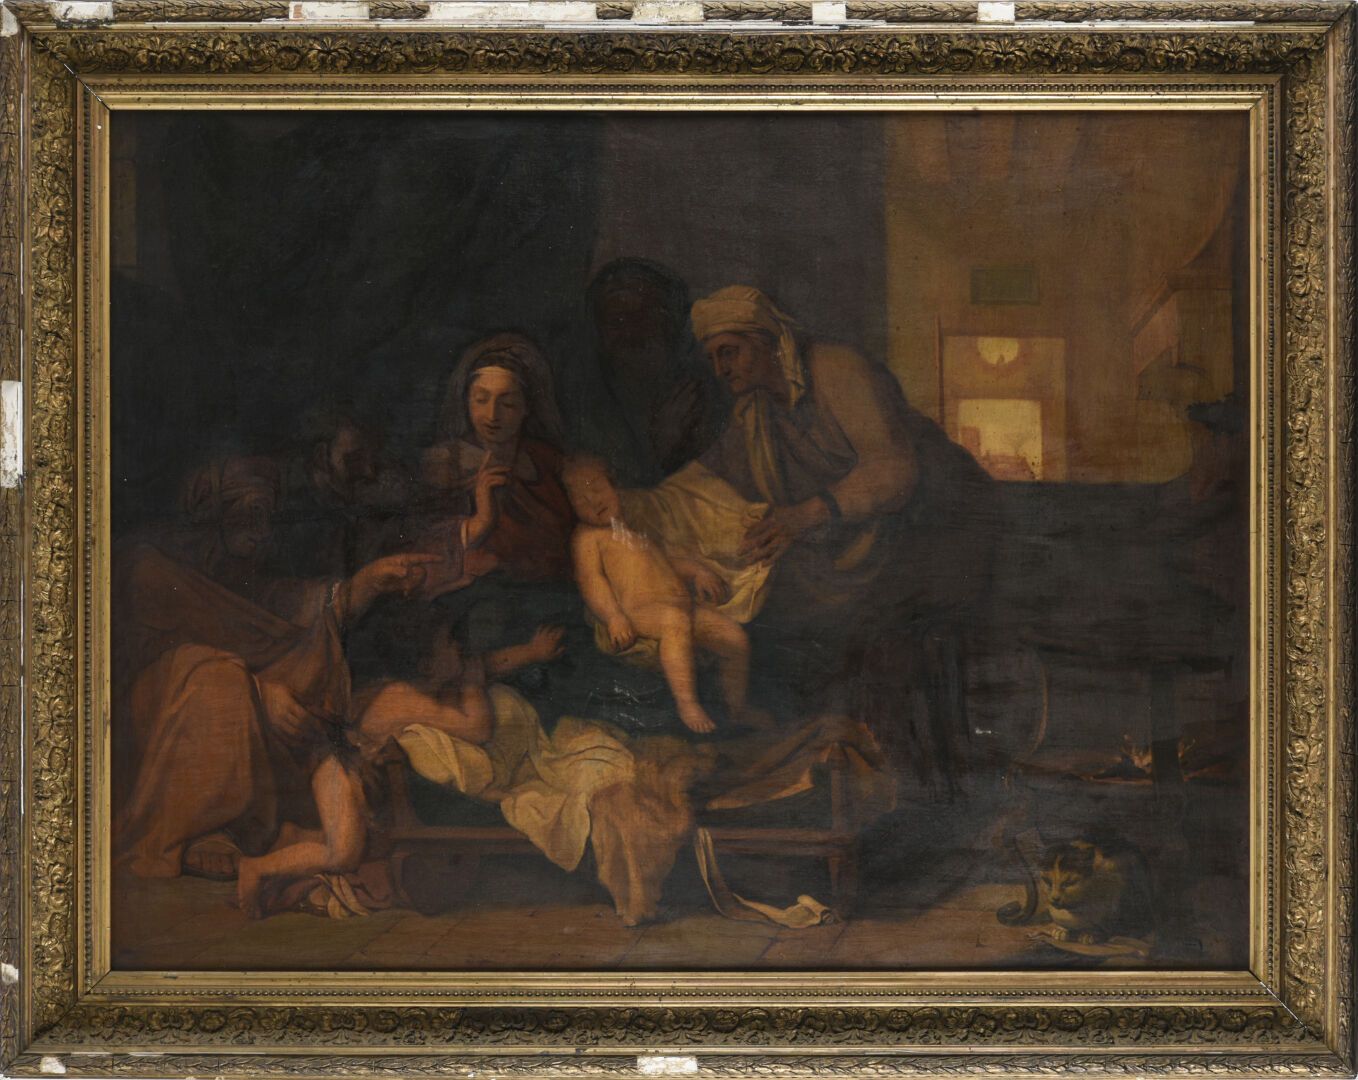 Null 在查尔斯-勒布朗（1619-1690）之后。
儿童耶稣的睡眠
布面油画，18世纪
90 x 125厘米